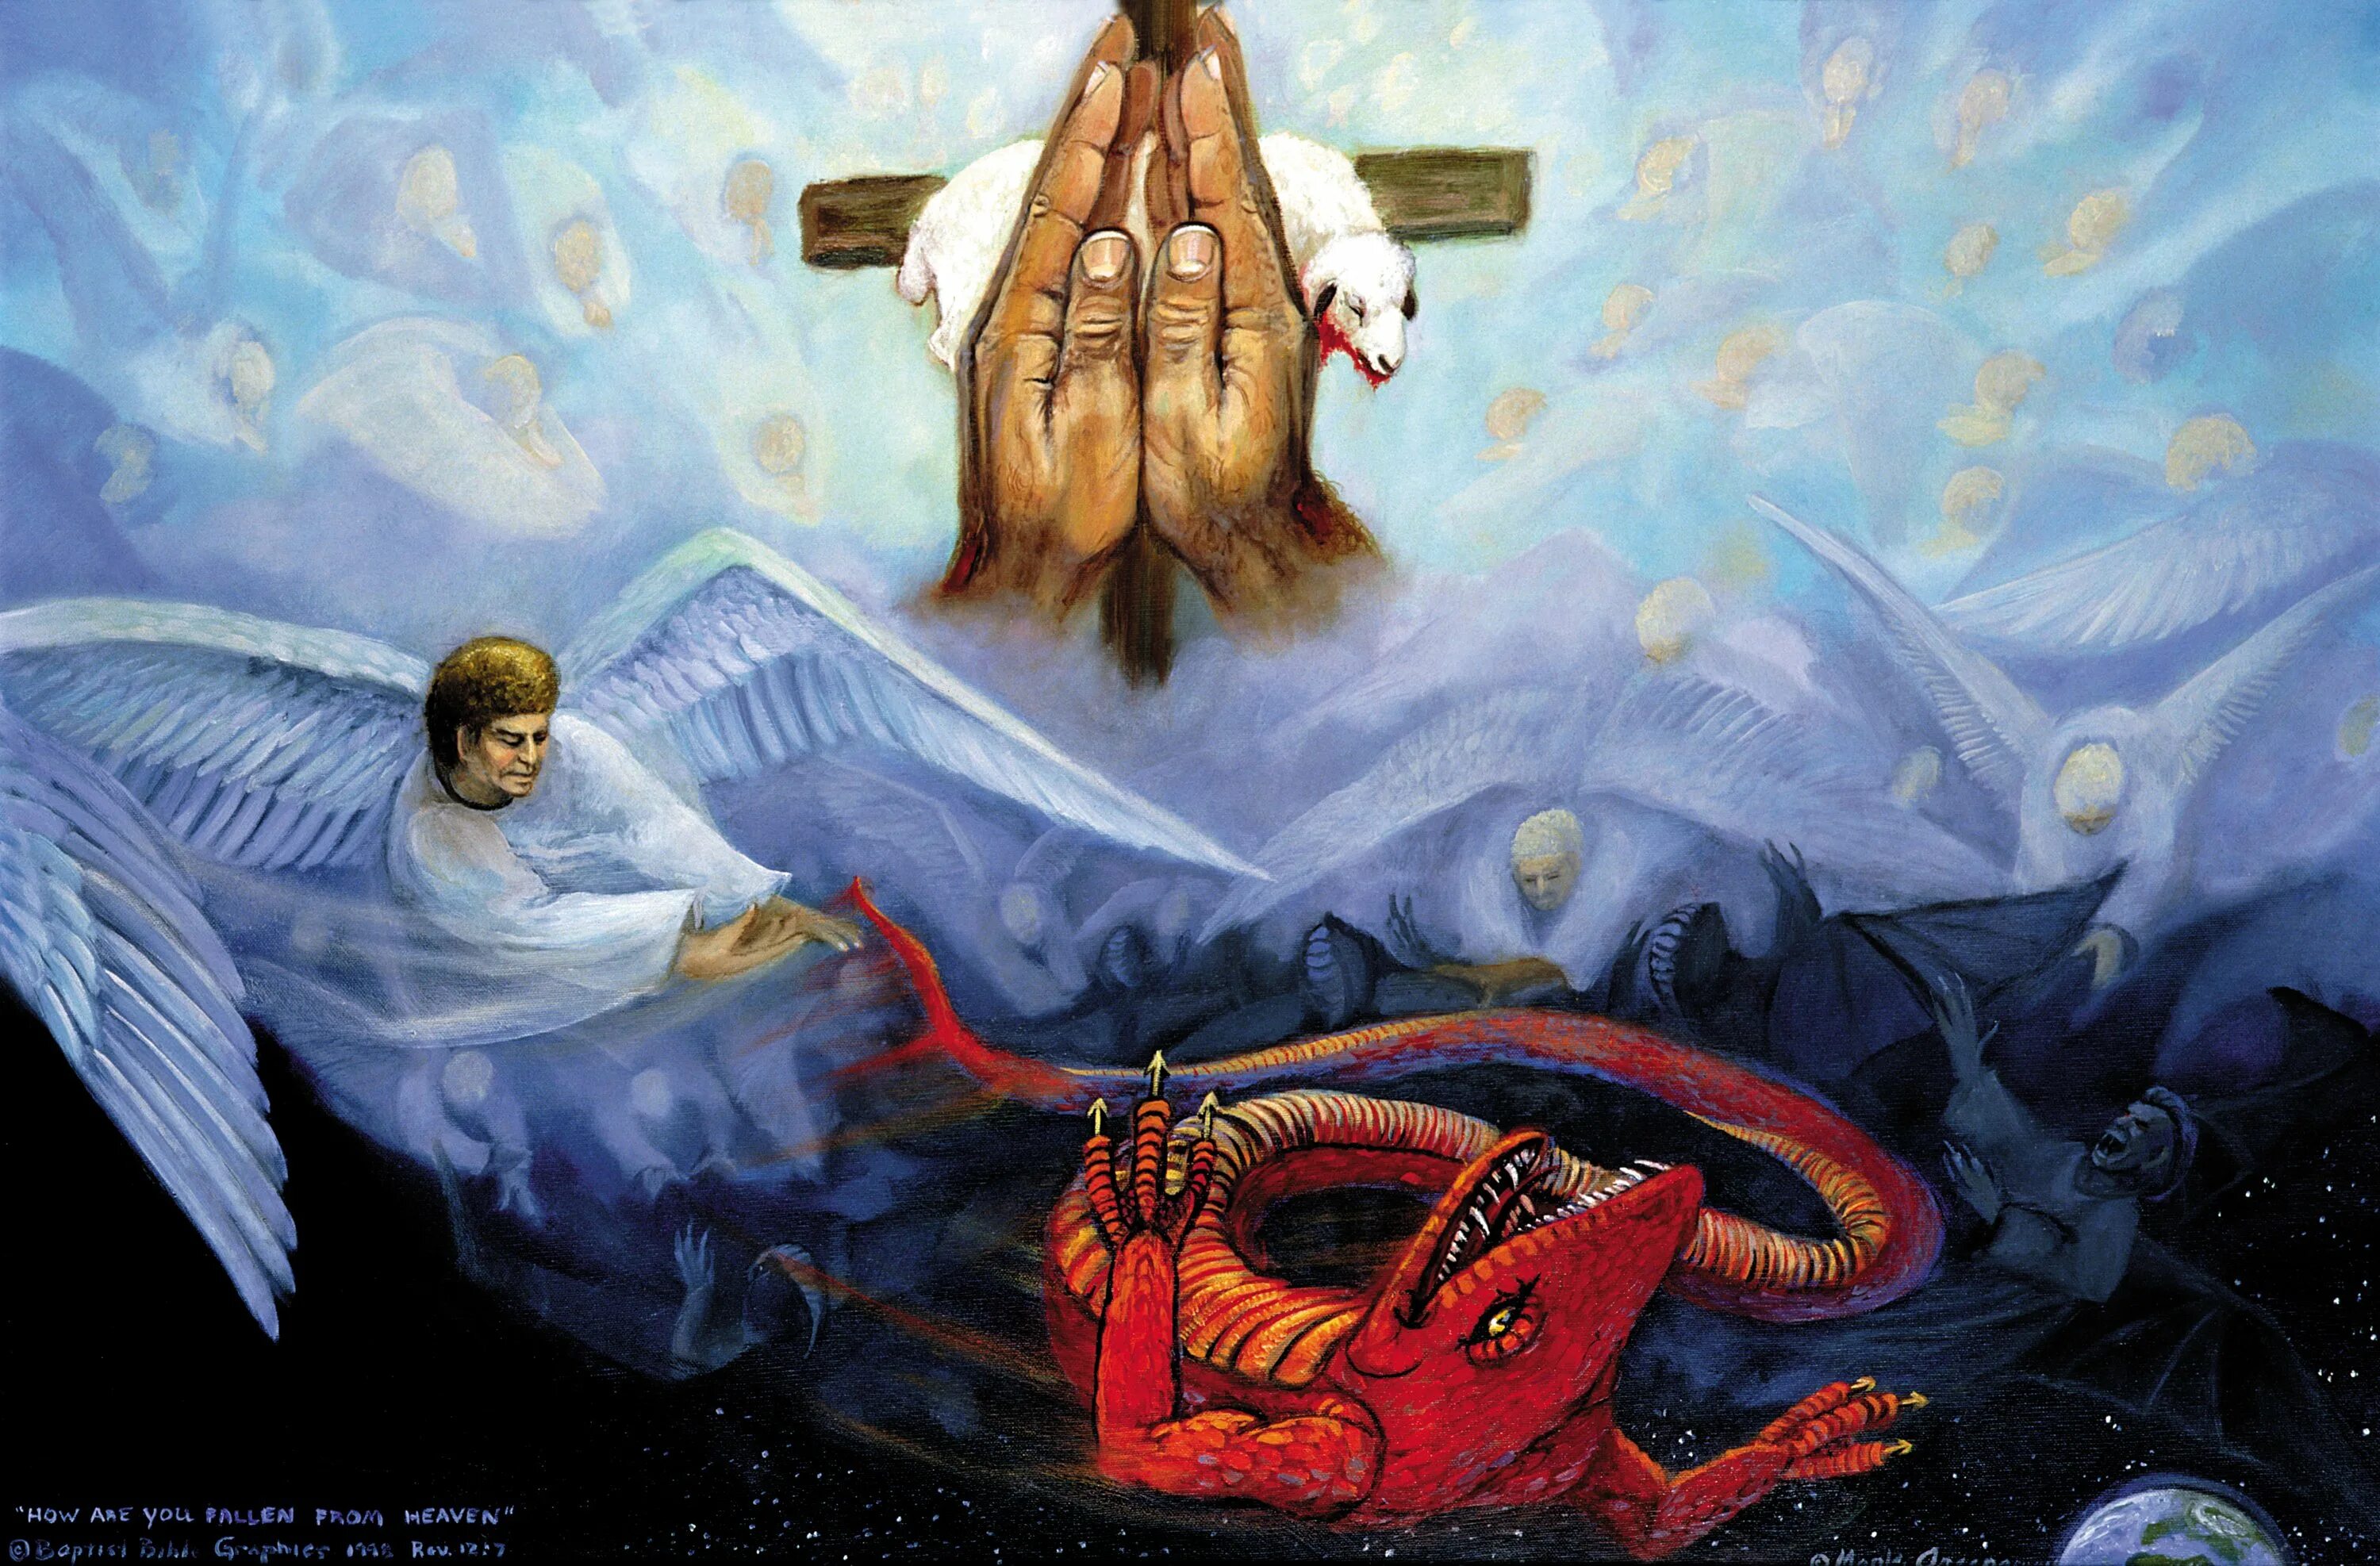 Армагеддон Библия Библия. Бог и дьявол. Иллюстрации откровения. Армагеддон картина Библия. Армагеддон библия